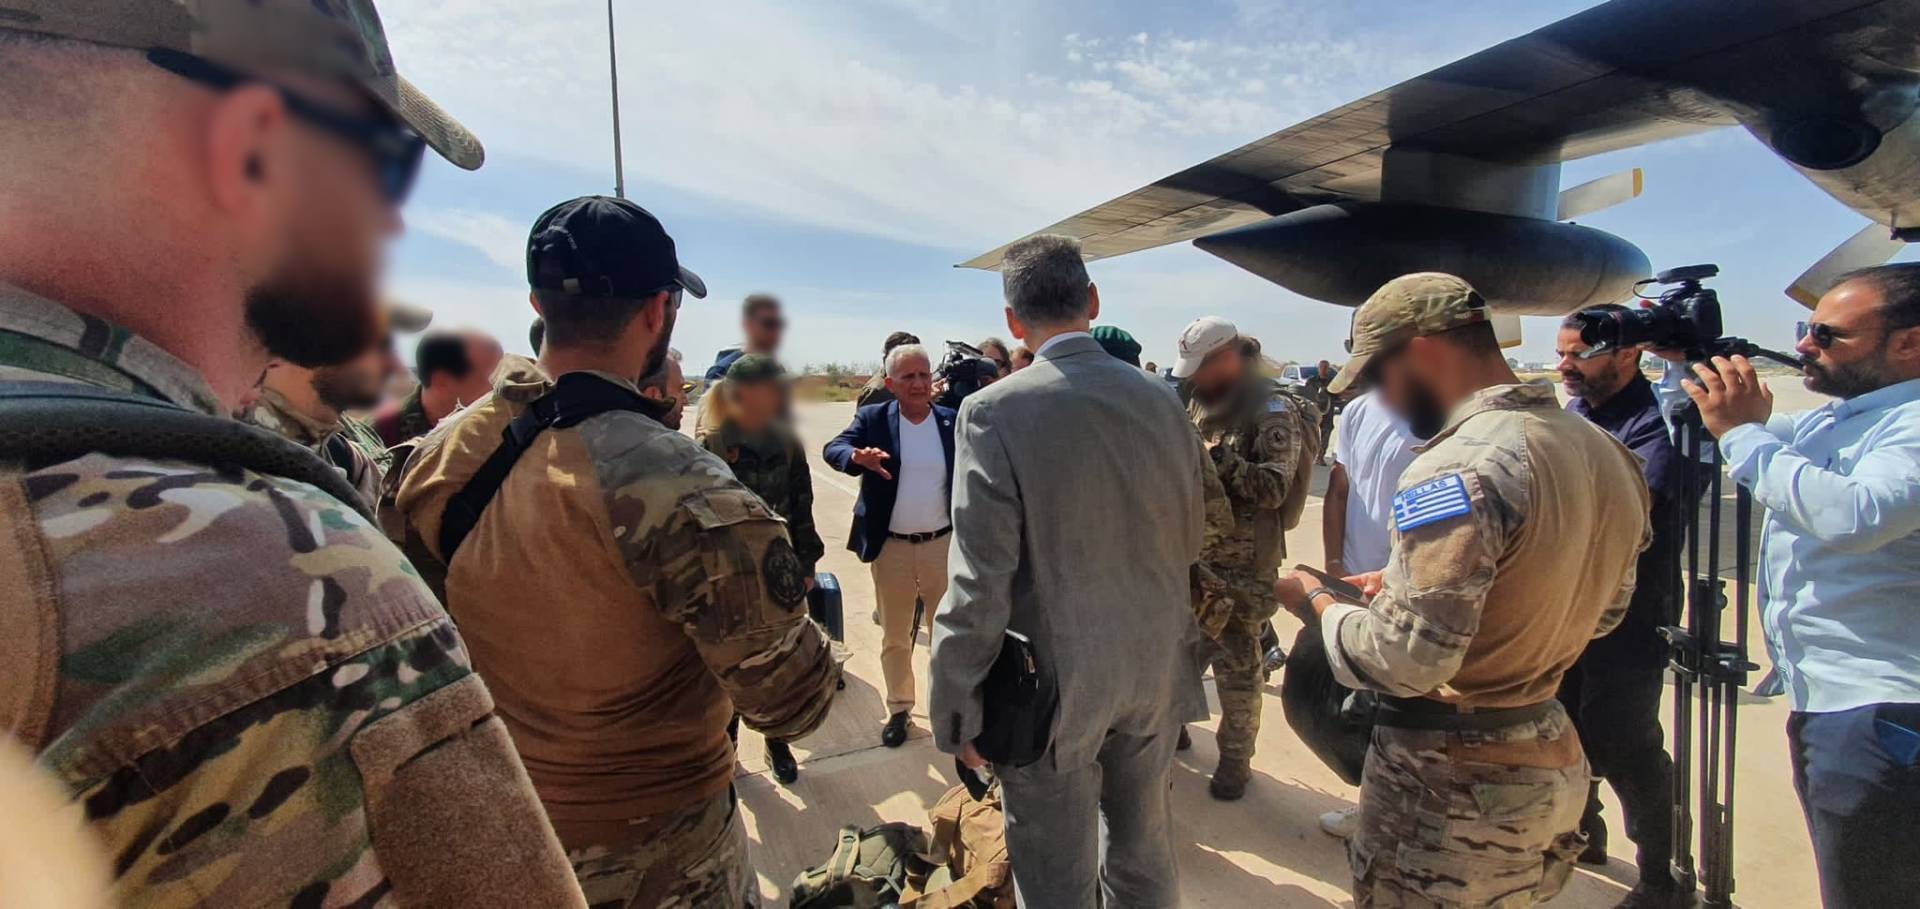 Nτοκουμέντο: Η άφιξη της ελληνικής αποστολής στη Λιβύη λίγα λεπτά πριν από την τραγωδία